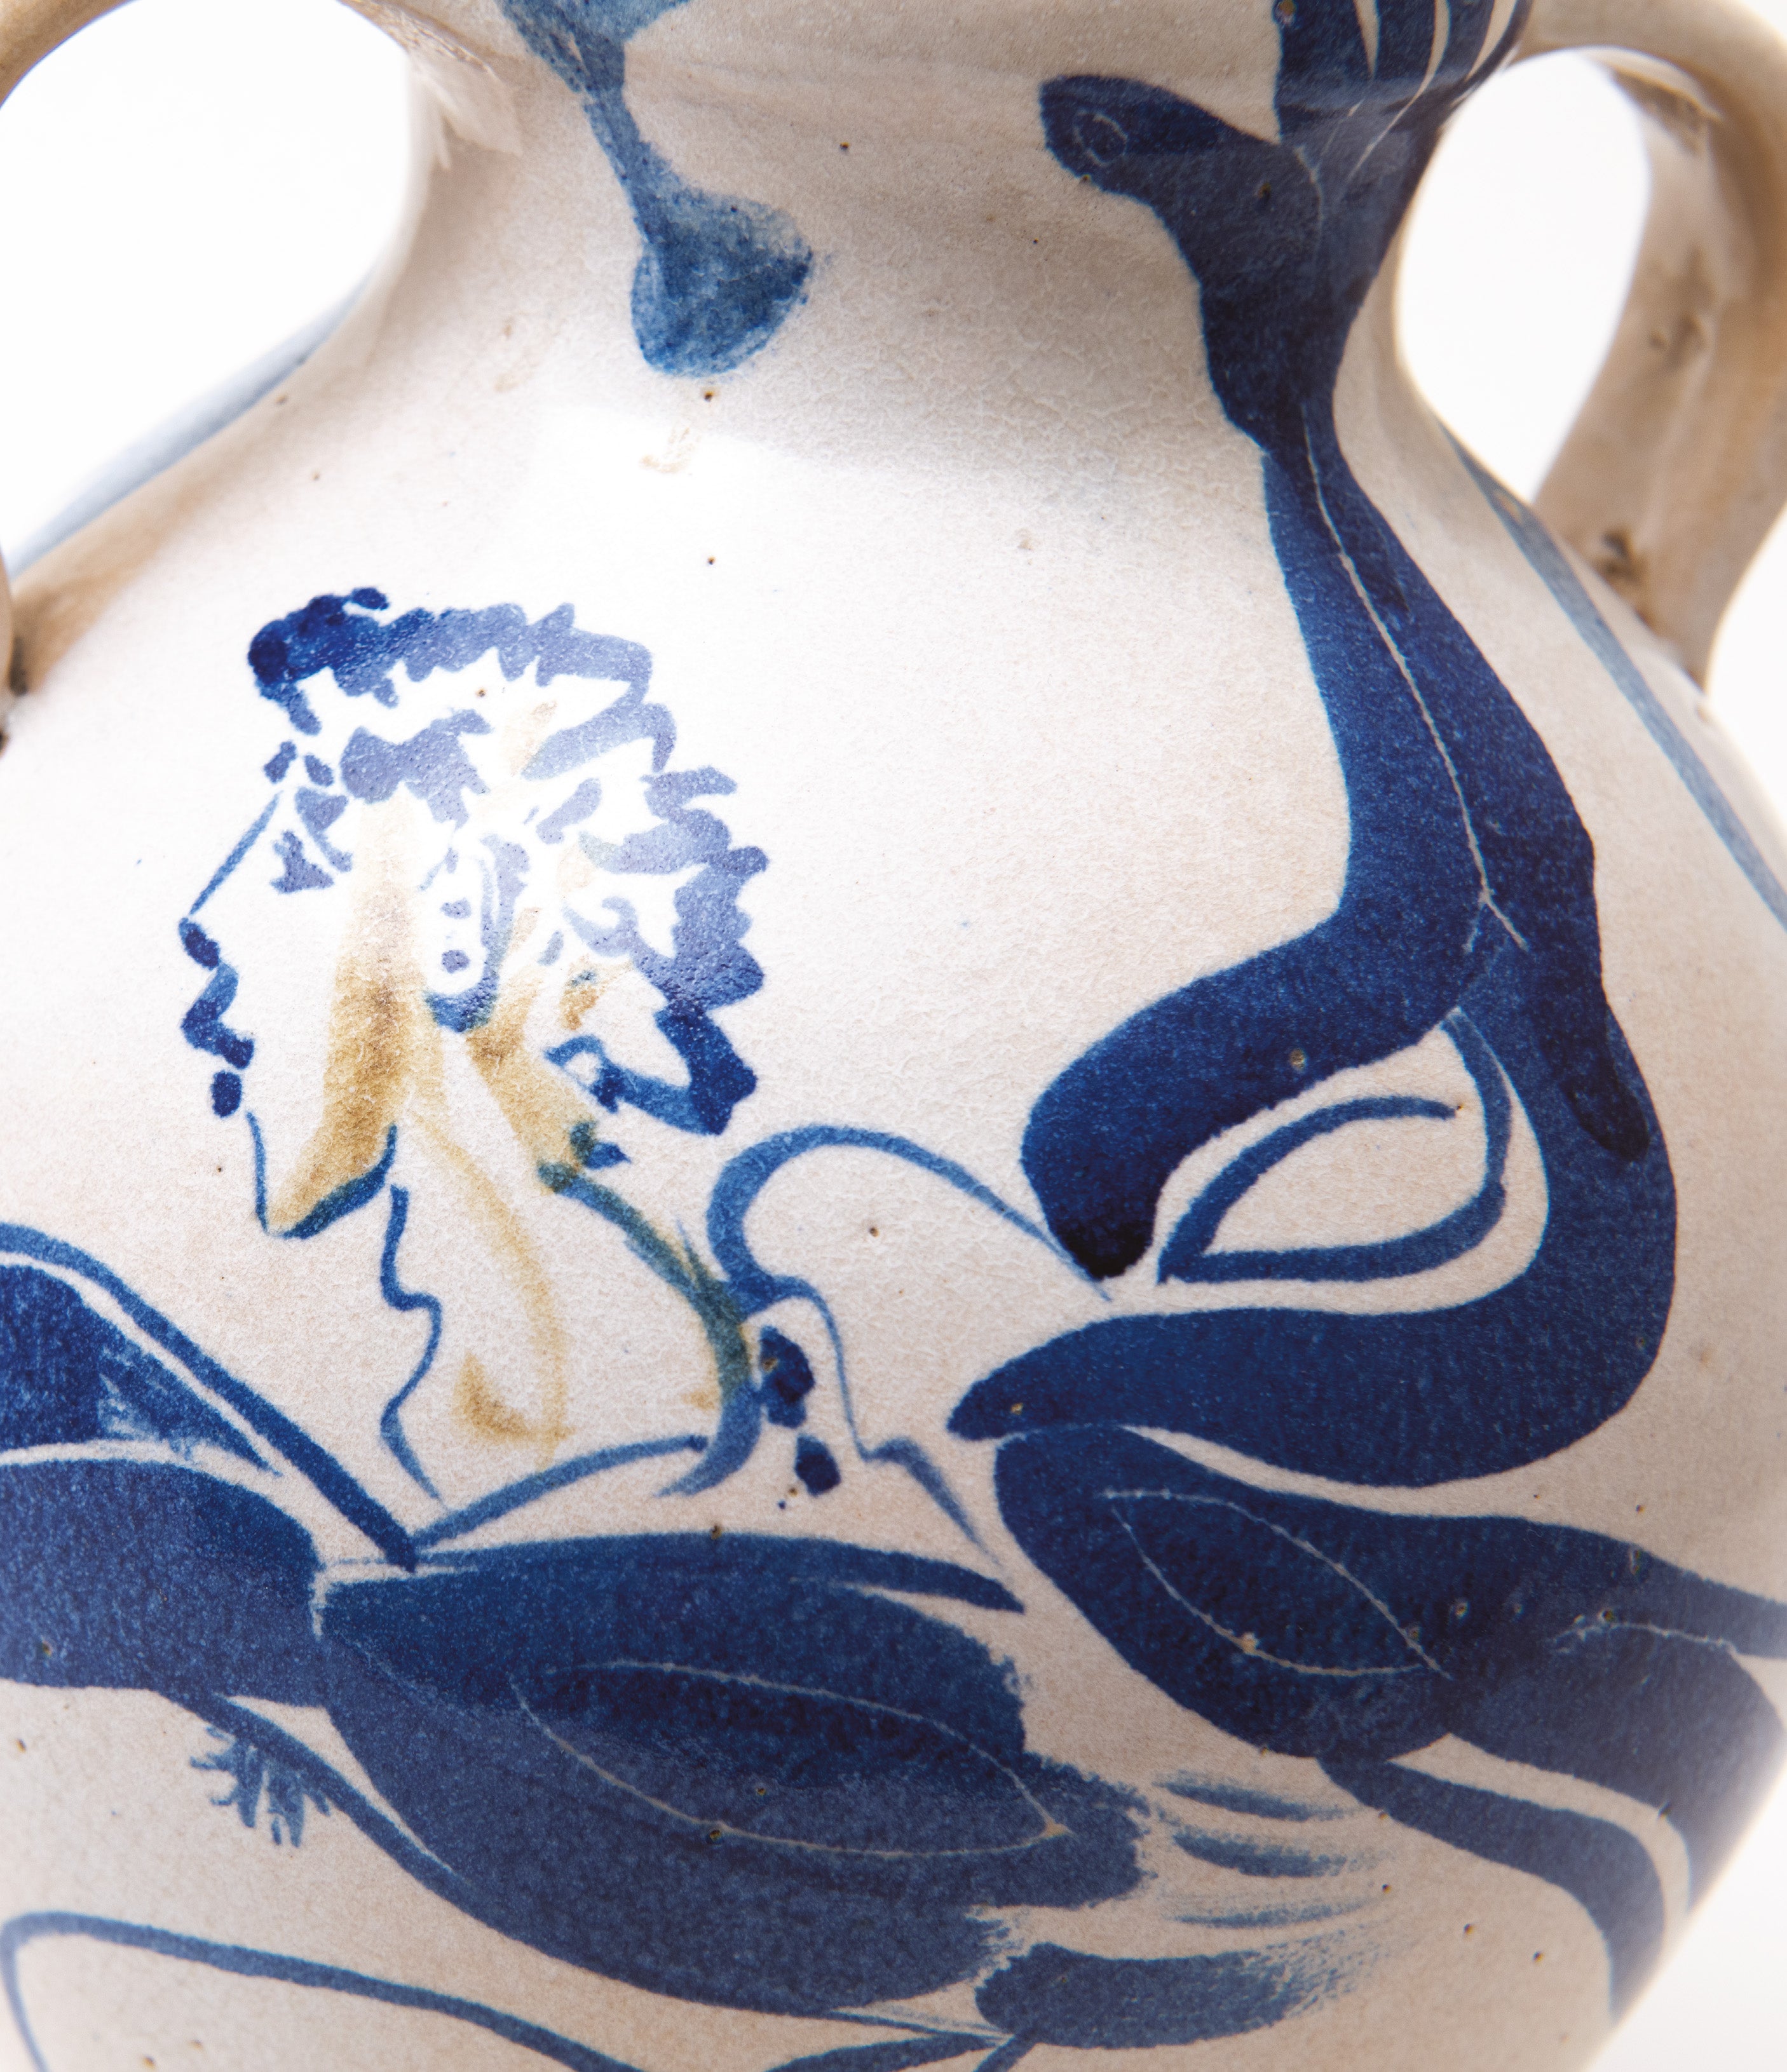 Ceri Richards, Vase with Handles, hand-painted ceramic